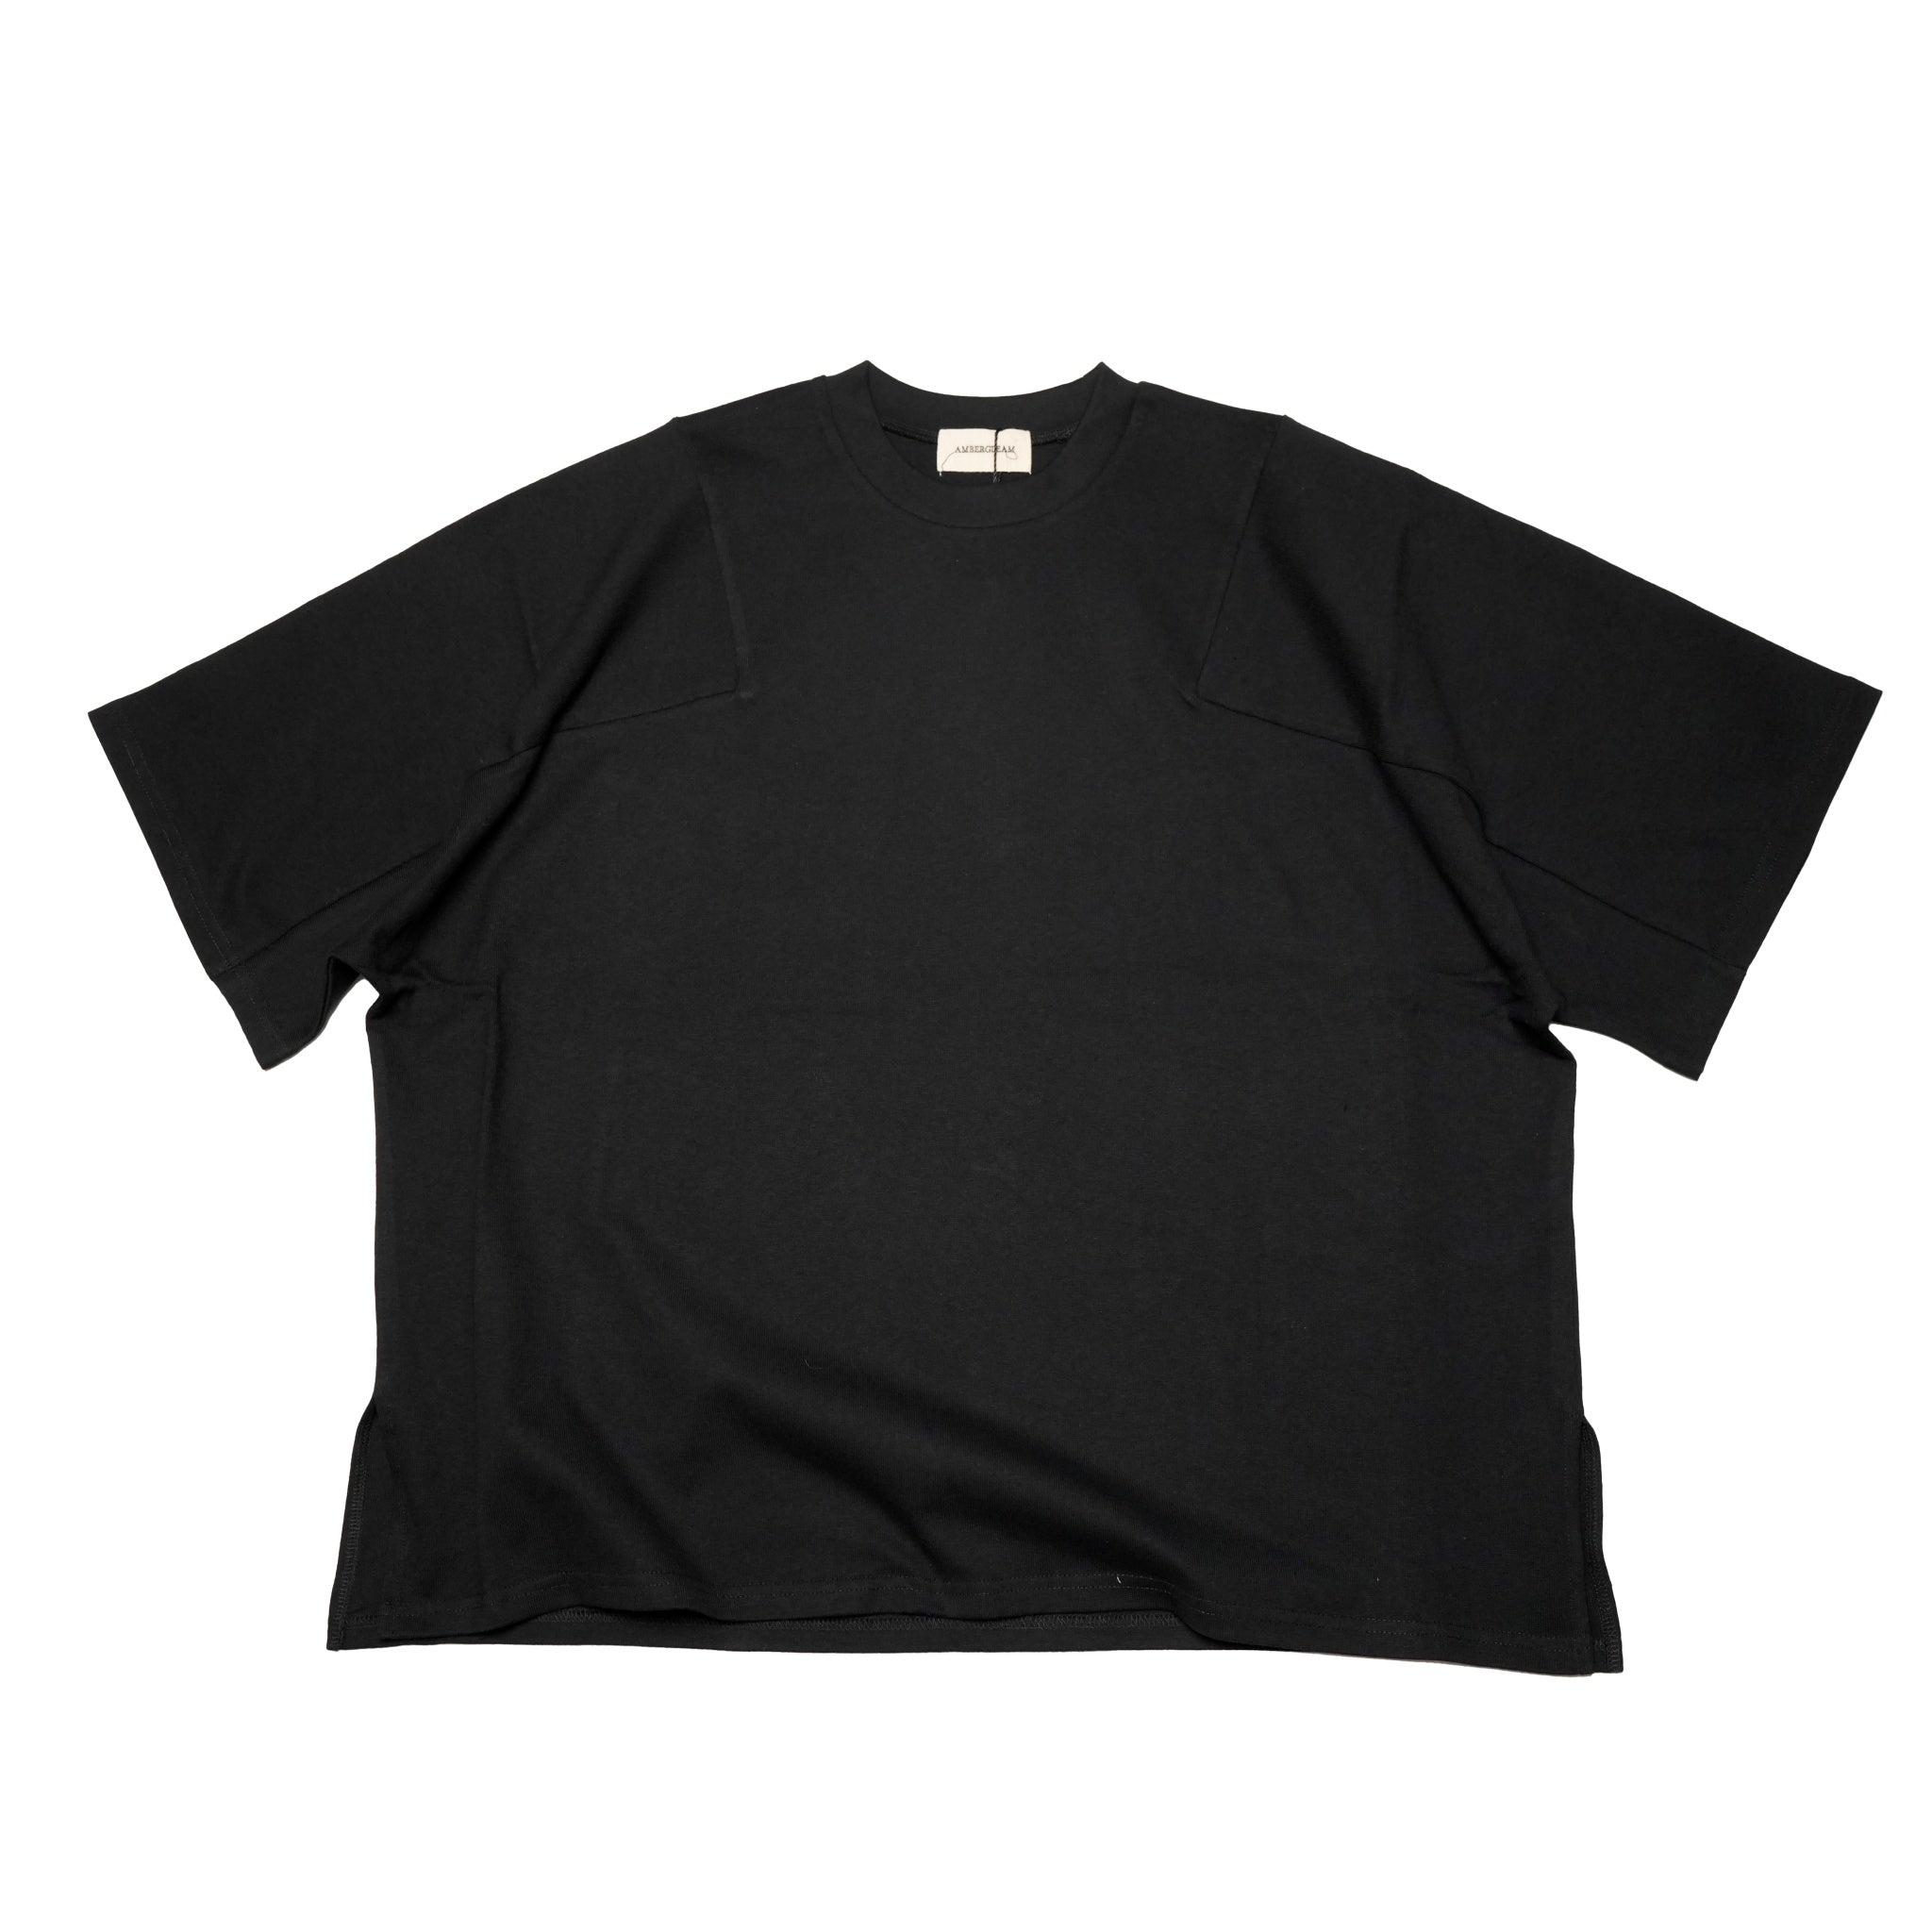 Name:Panel Basic T-Shirt | Color:Black/Moon Gray/Bitter Orange/Violet【AMBERGLEAM_アンバーグリーム】| No:1168141311